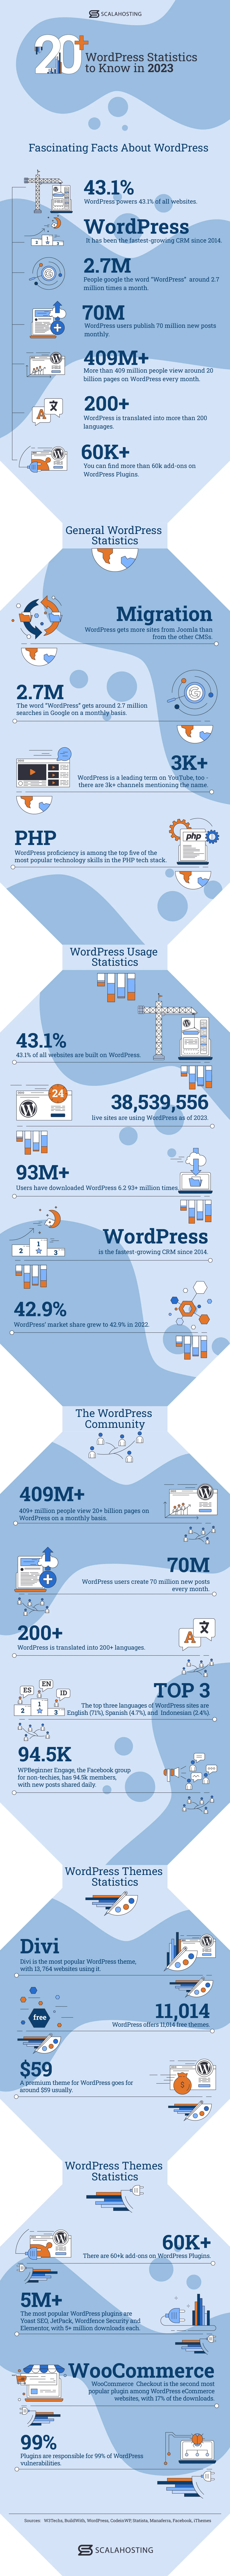 20+ WordPress Statistics to Know in 2023